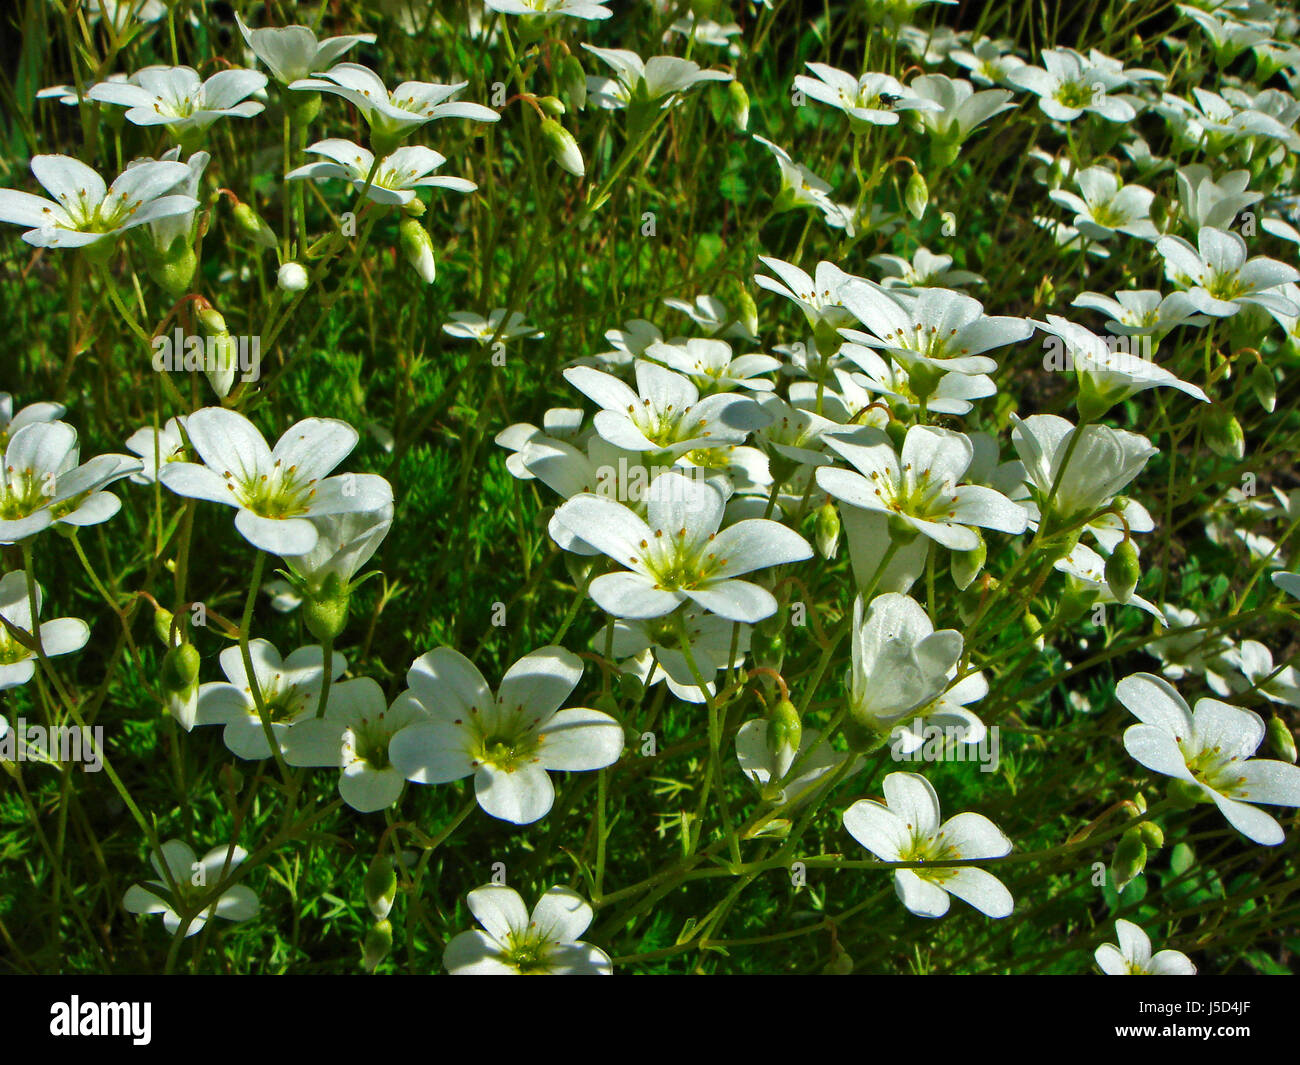 environment enviroment plant flower bloom blossom flourish flourishing flowers Stock Photo